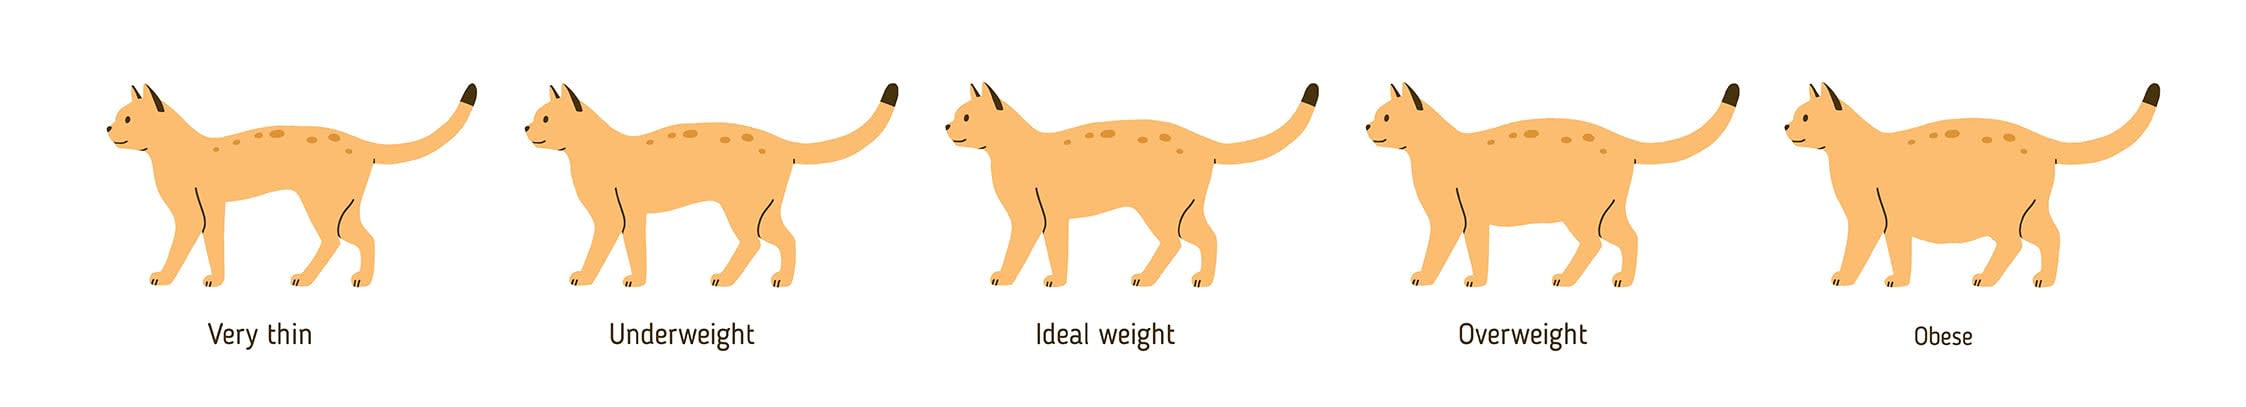 Overweight cat chart, Apple Valley Vet